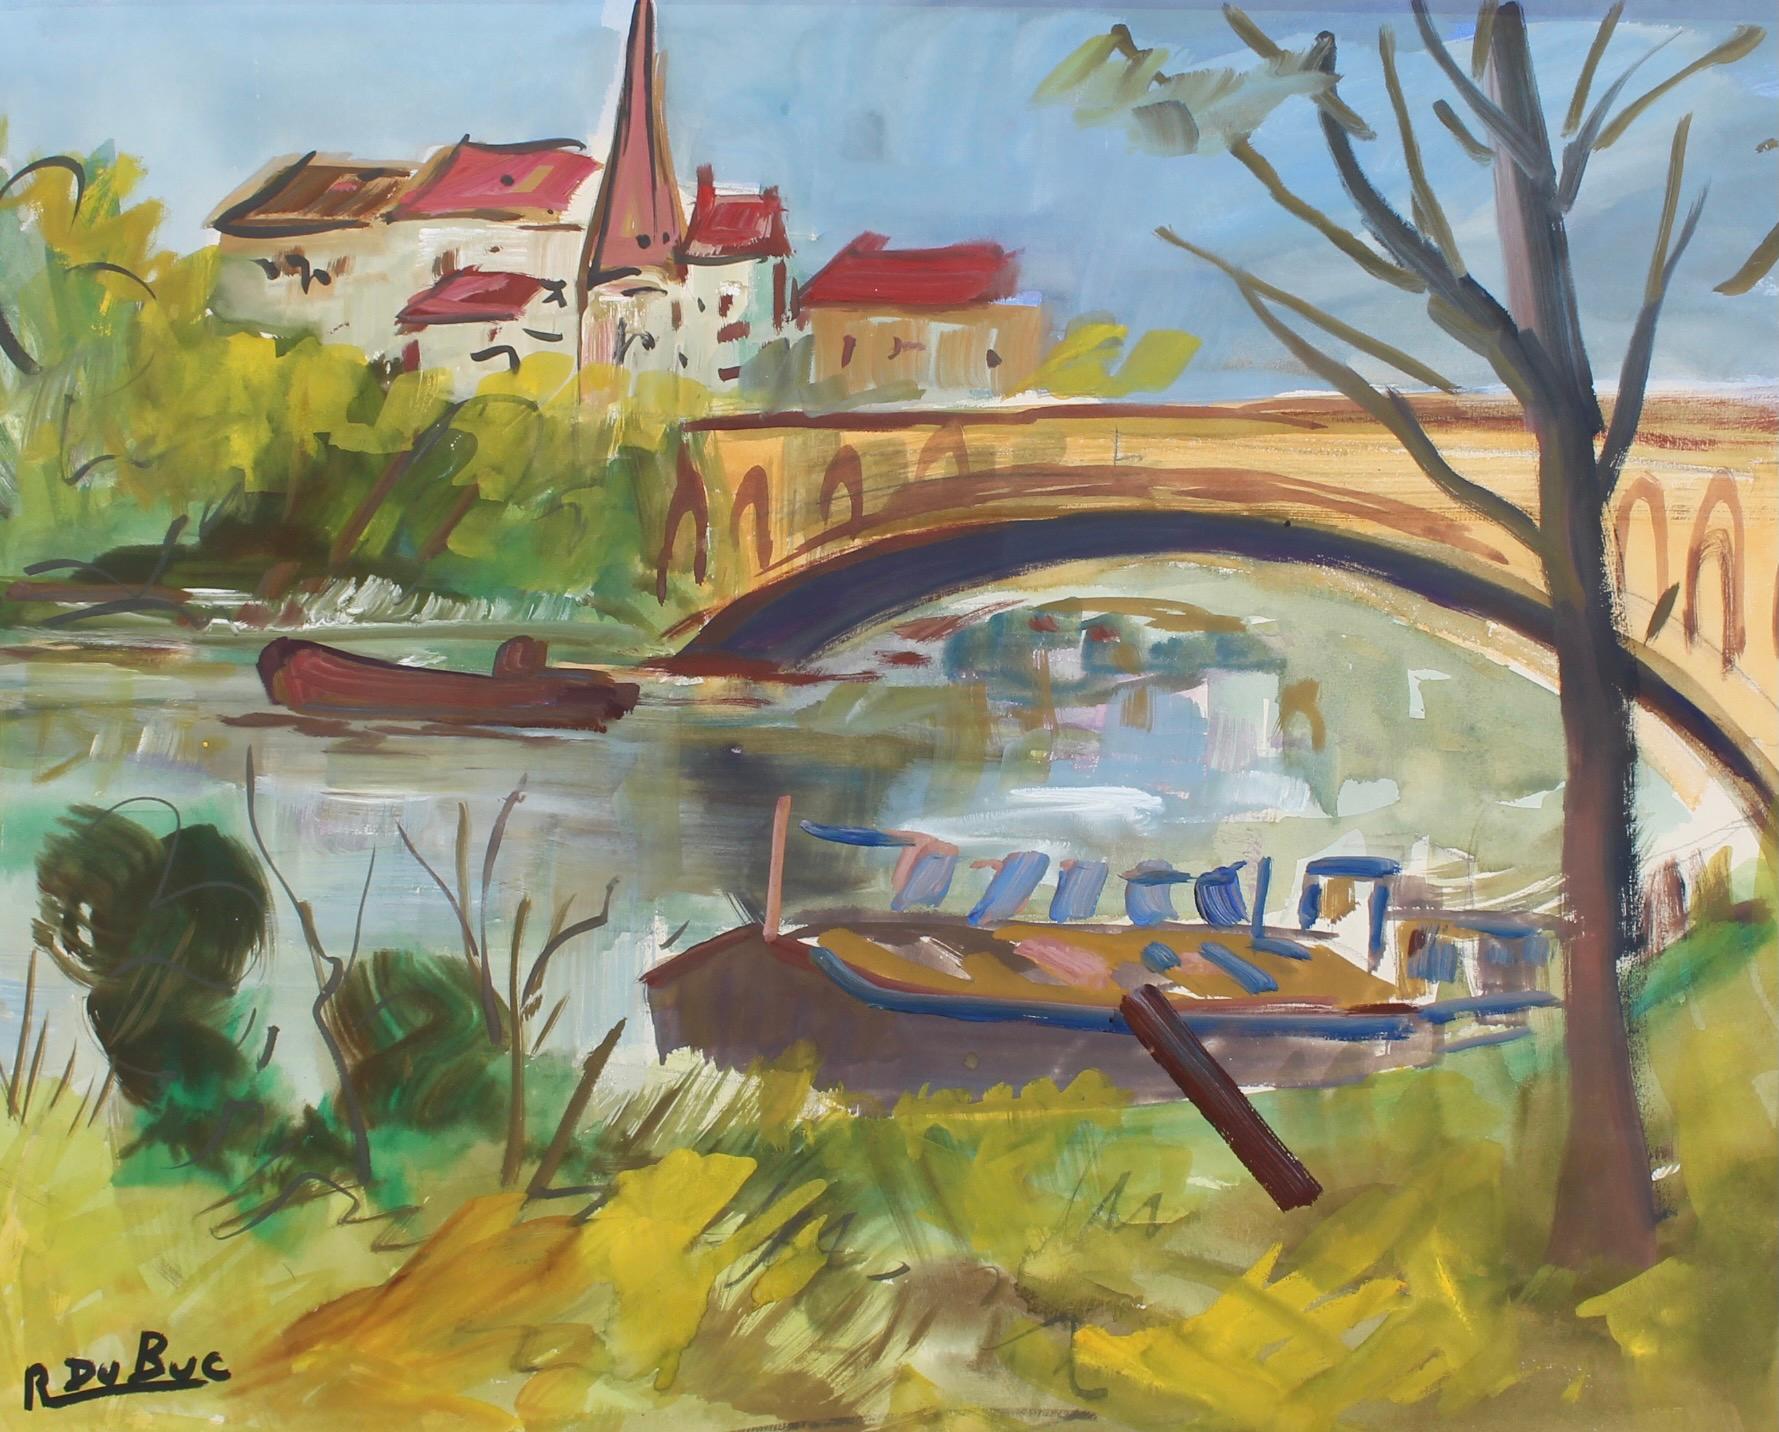 Roland DUBUC Landscape Painting - Barge on the Seine River